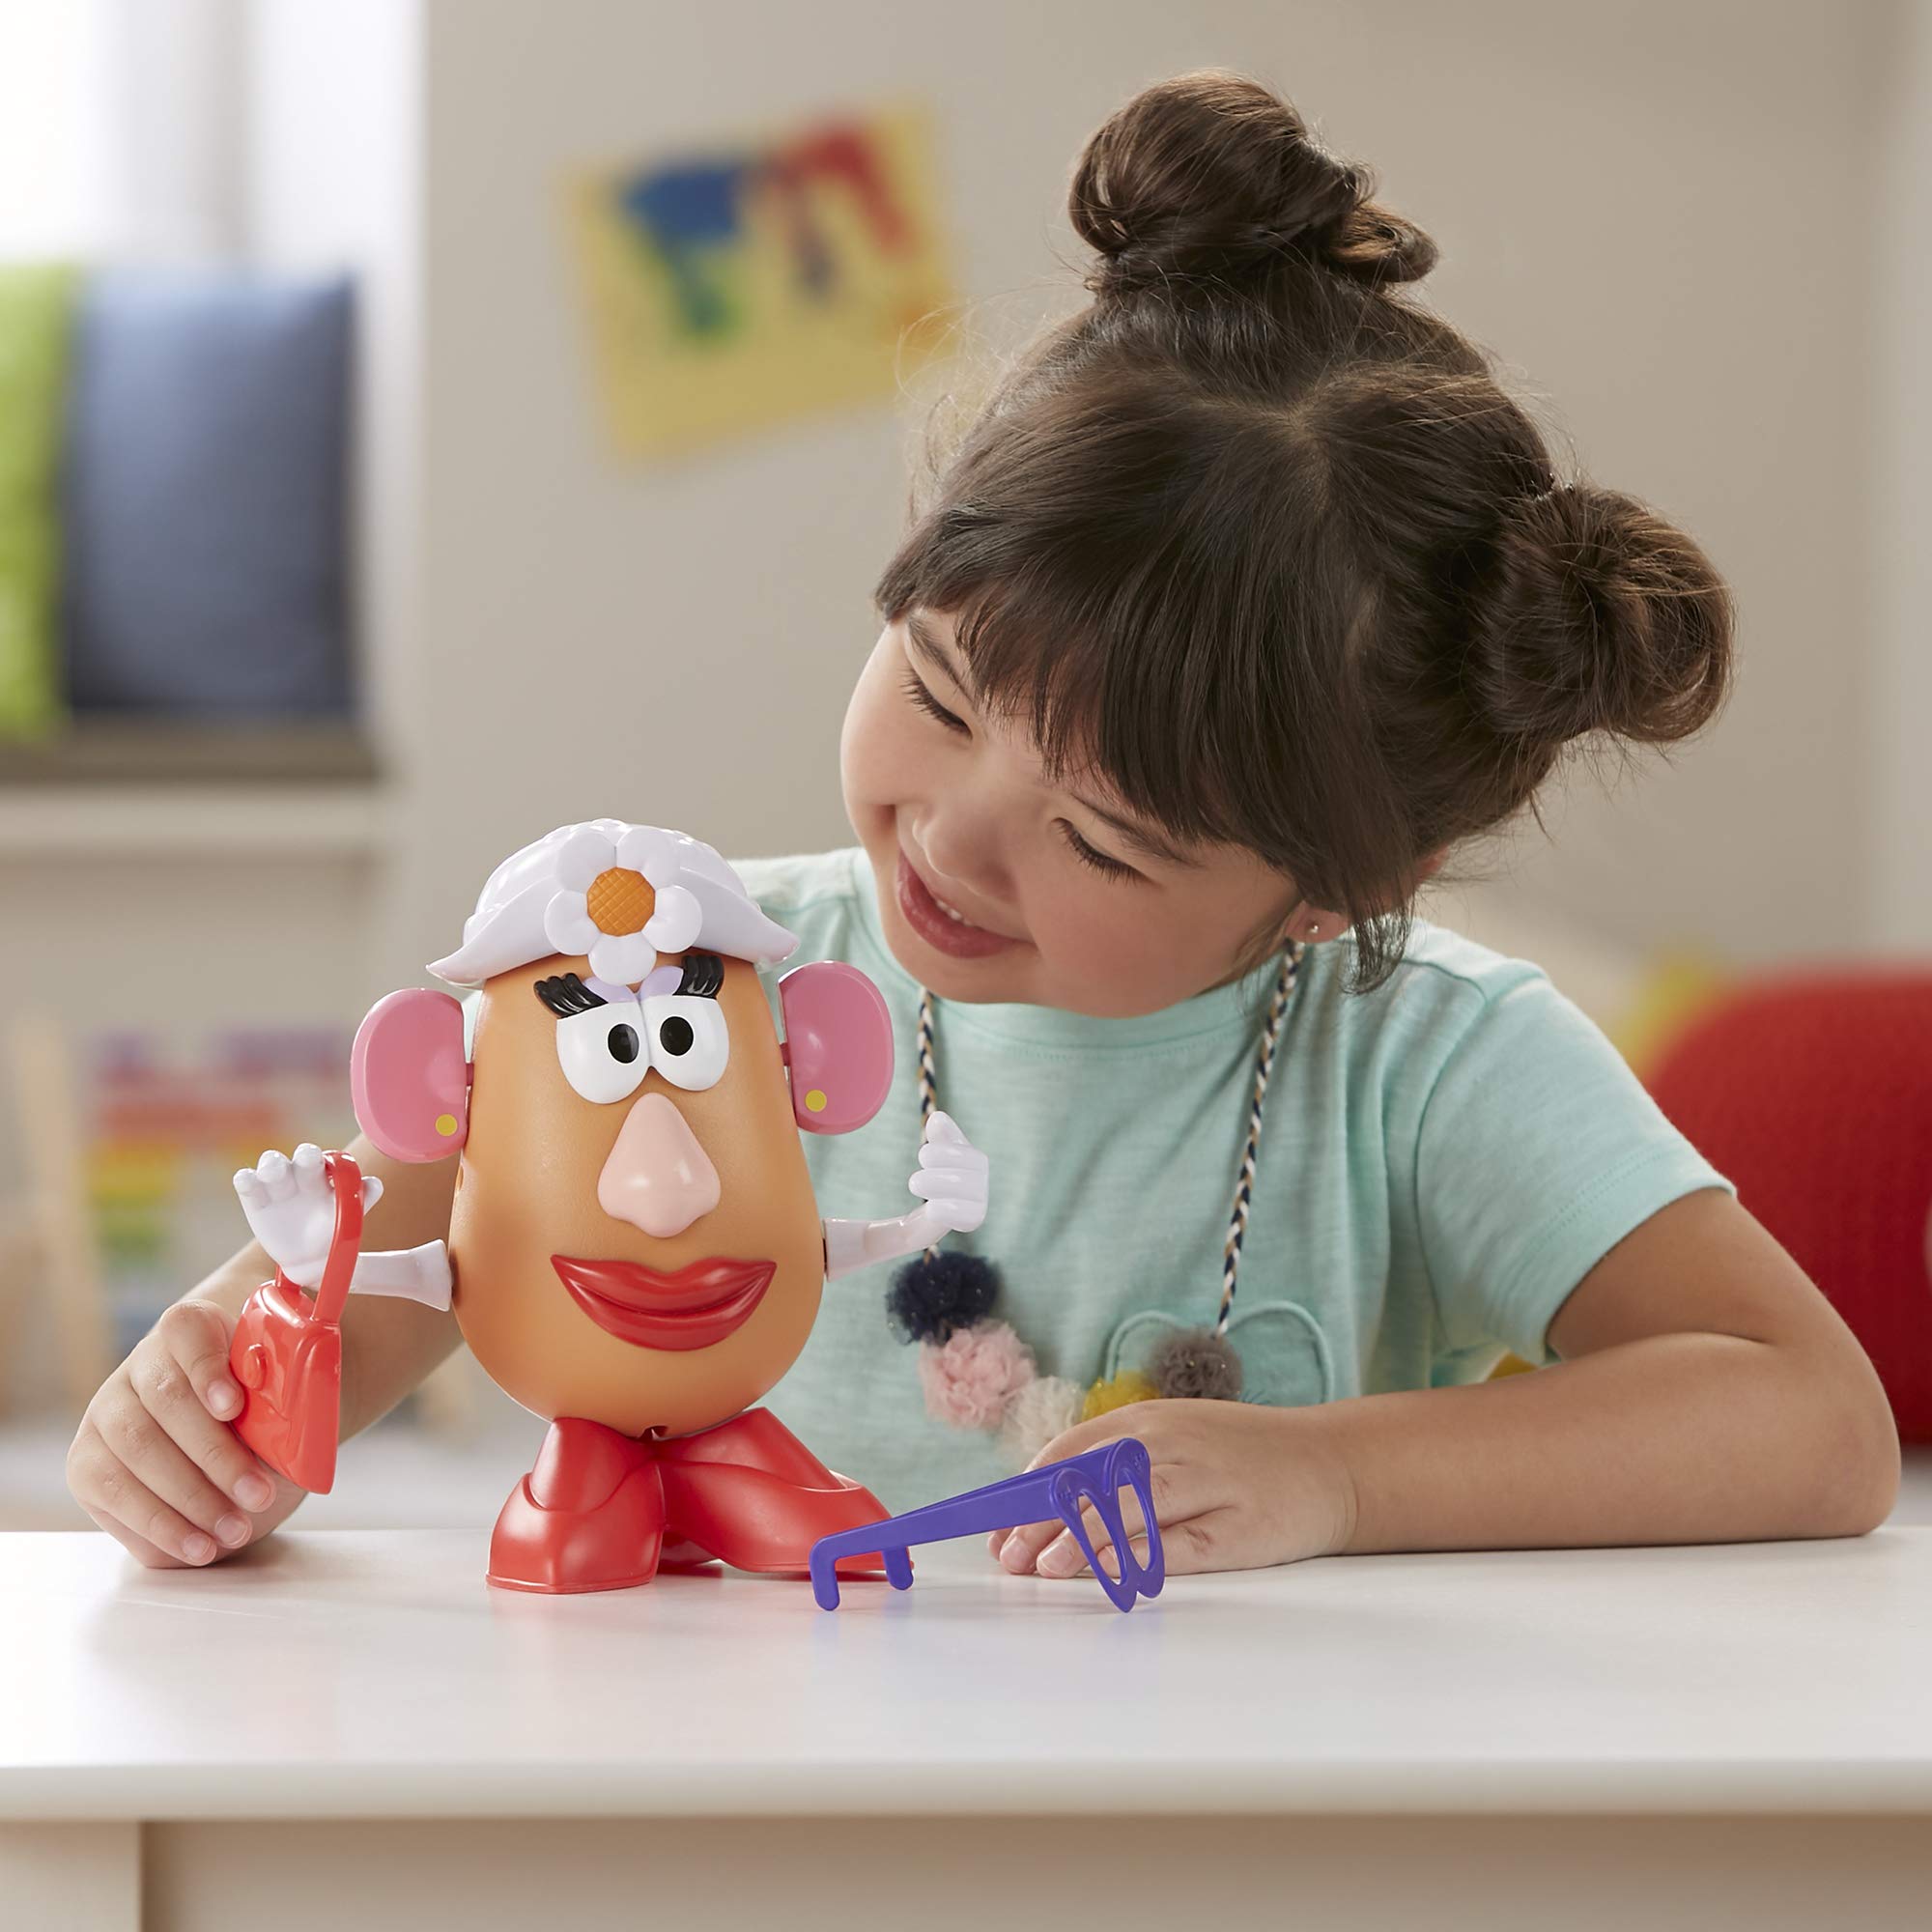 Mrs. Potato Head Disney/Pixar Toy Story 4 For Kids Ages 2 & Up